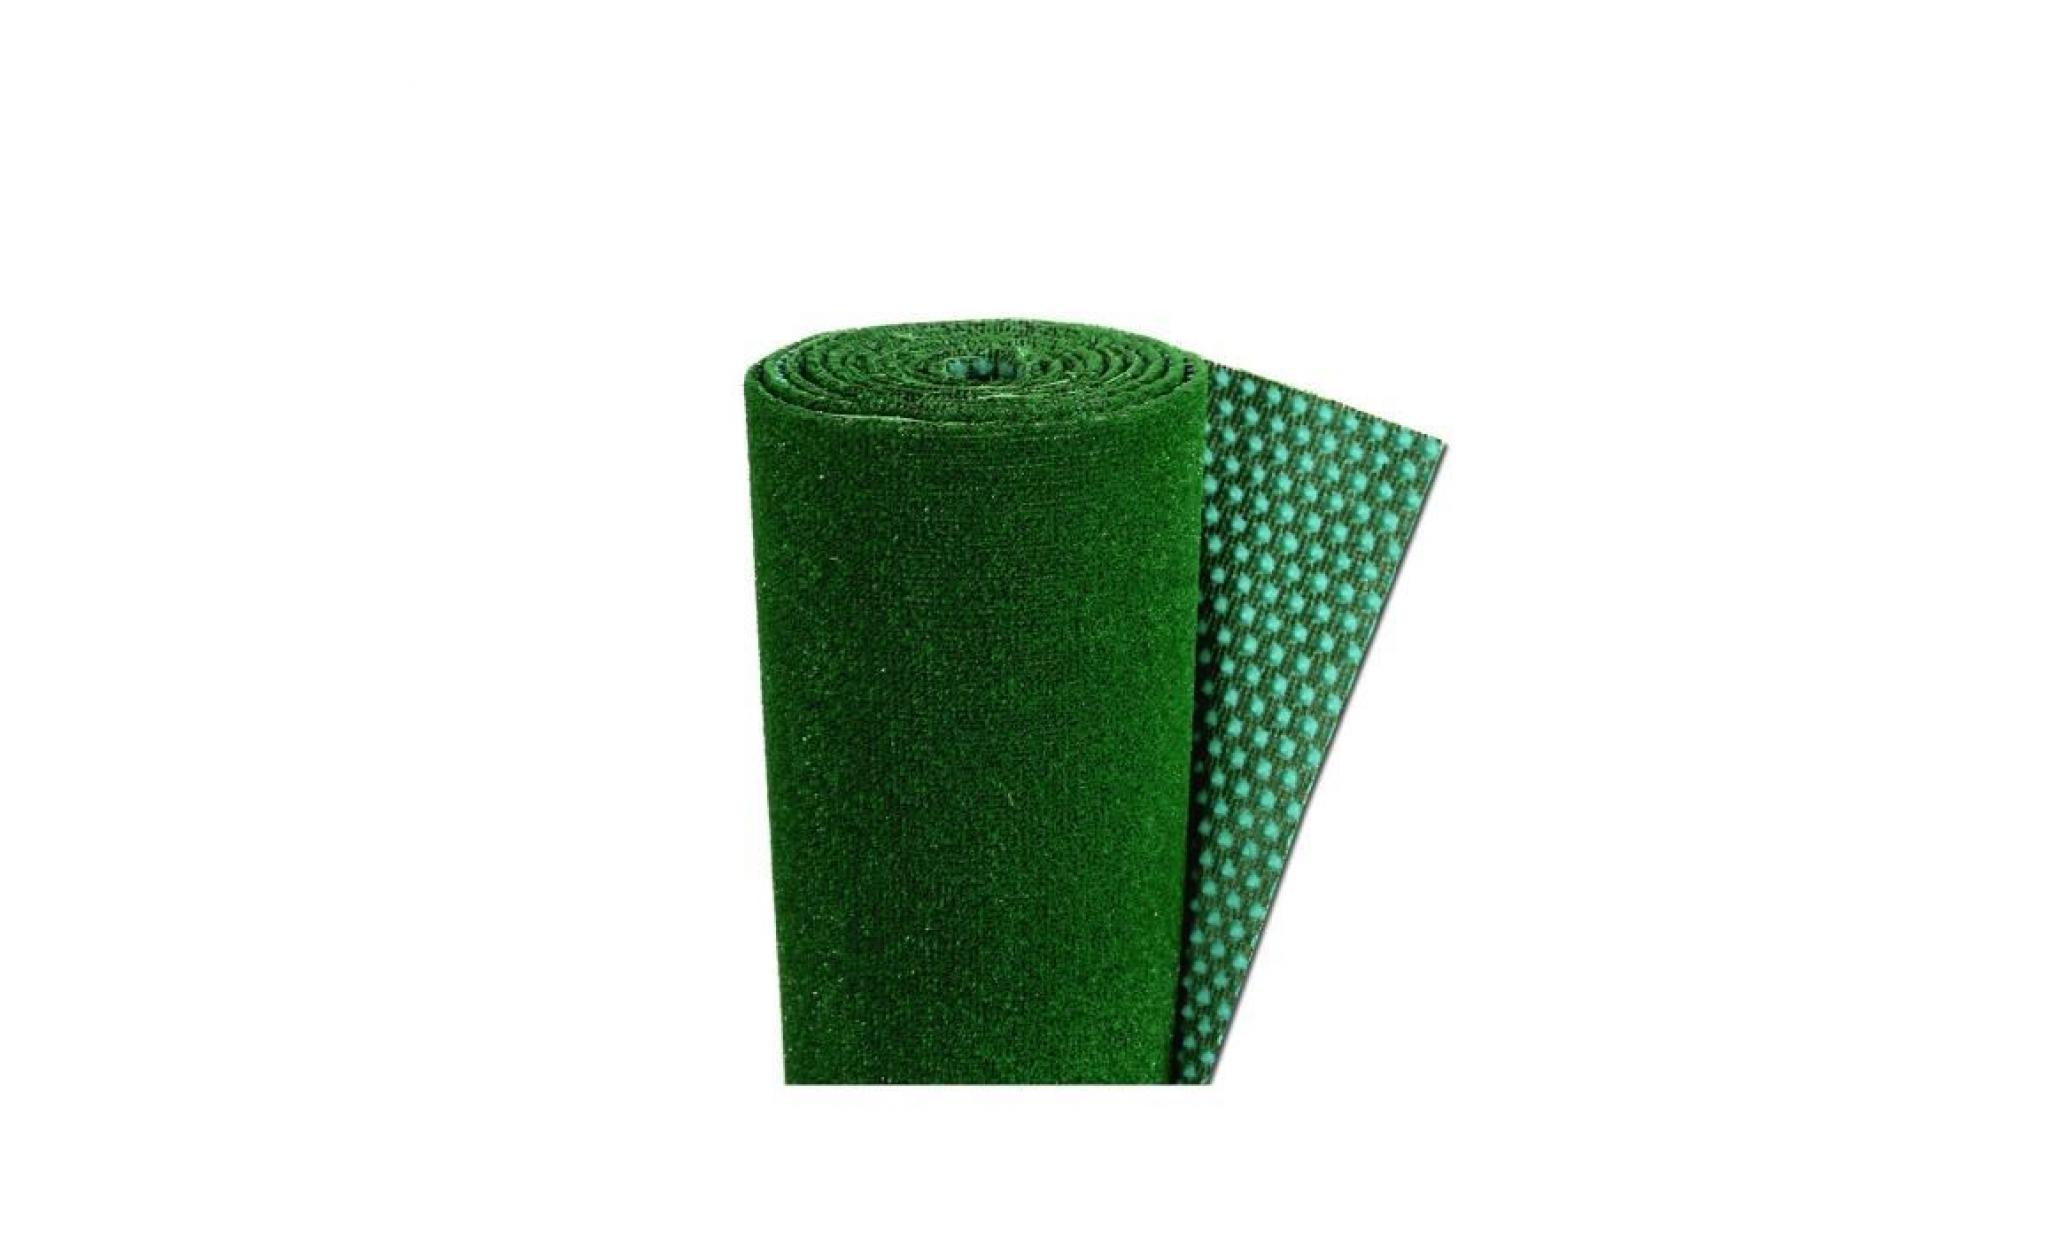 york   tapis type gazon artificiel avec nubs – pour jardin, terrasse, balcon   vert   [400x100 cm] pas cher